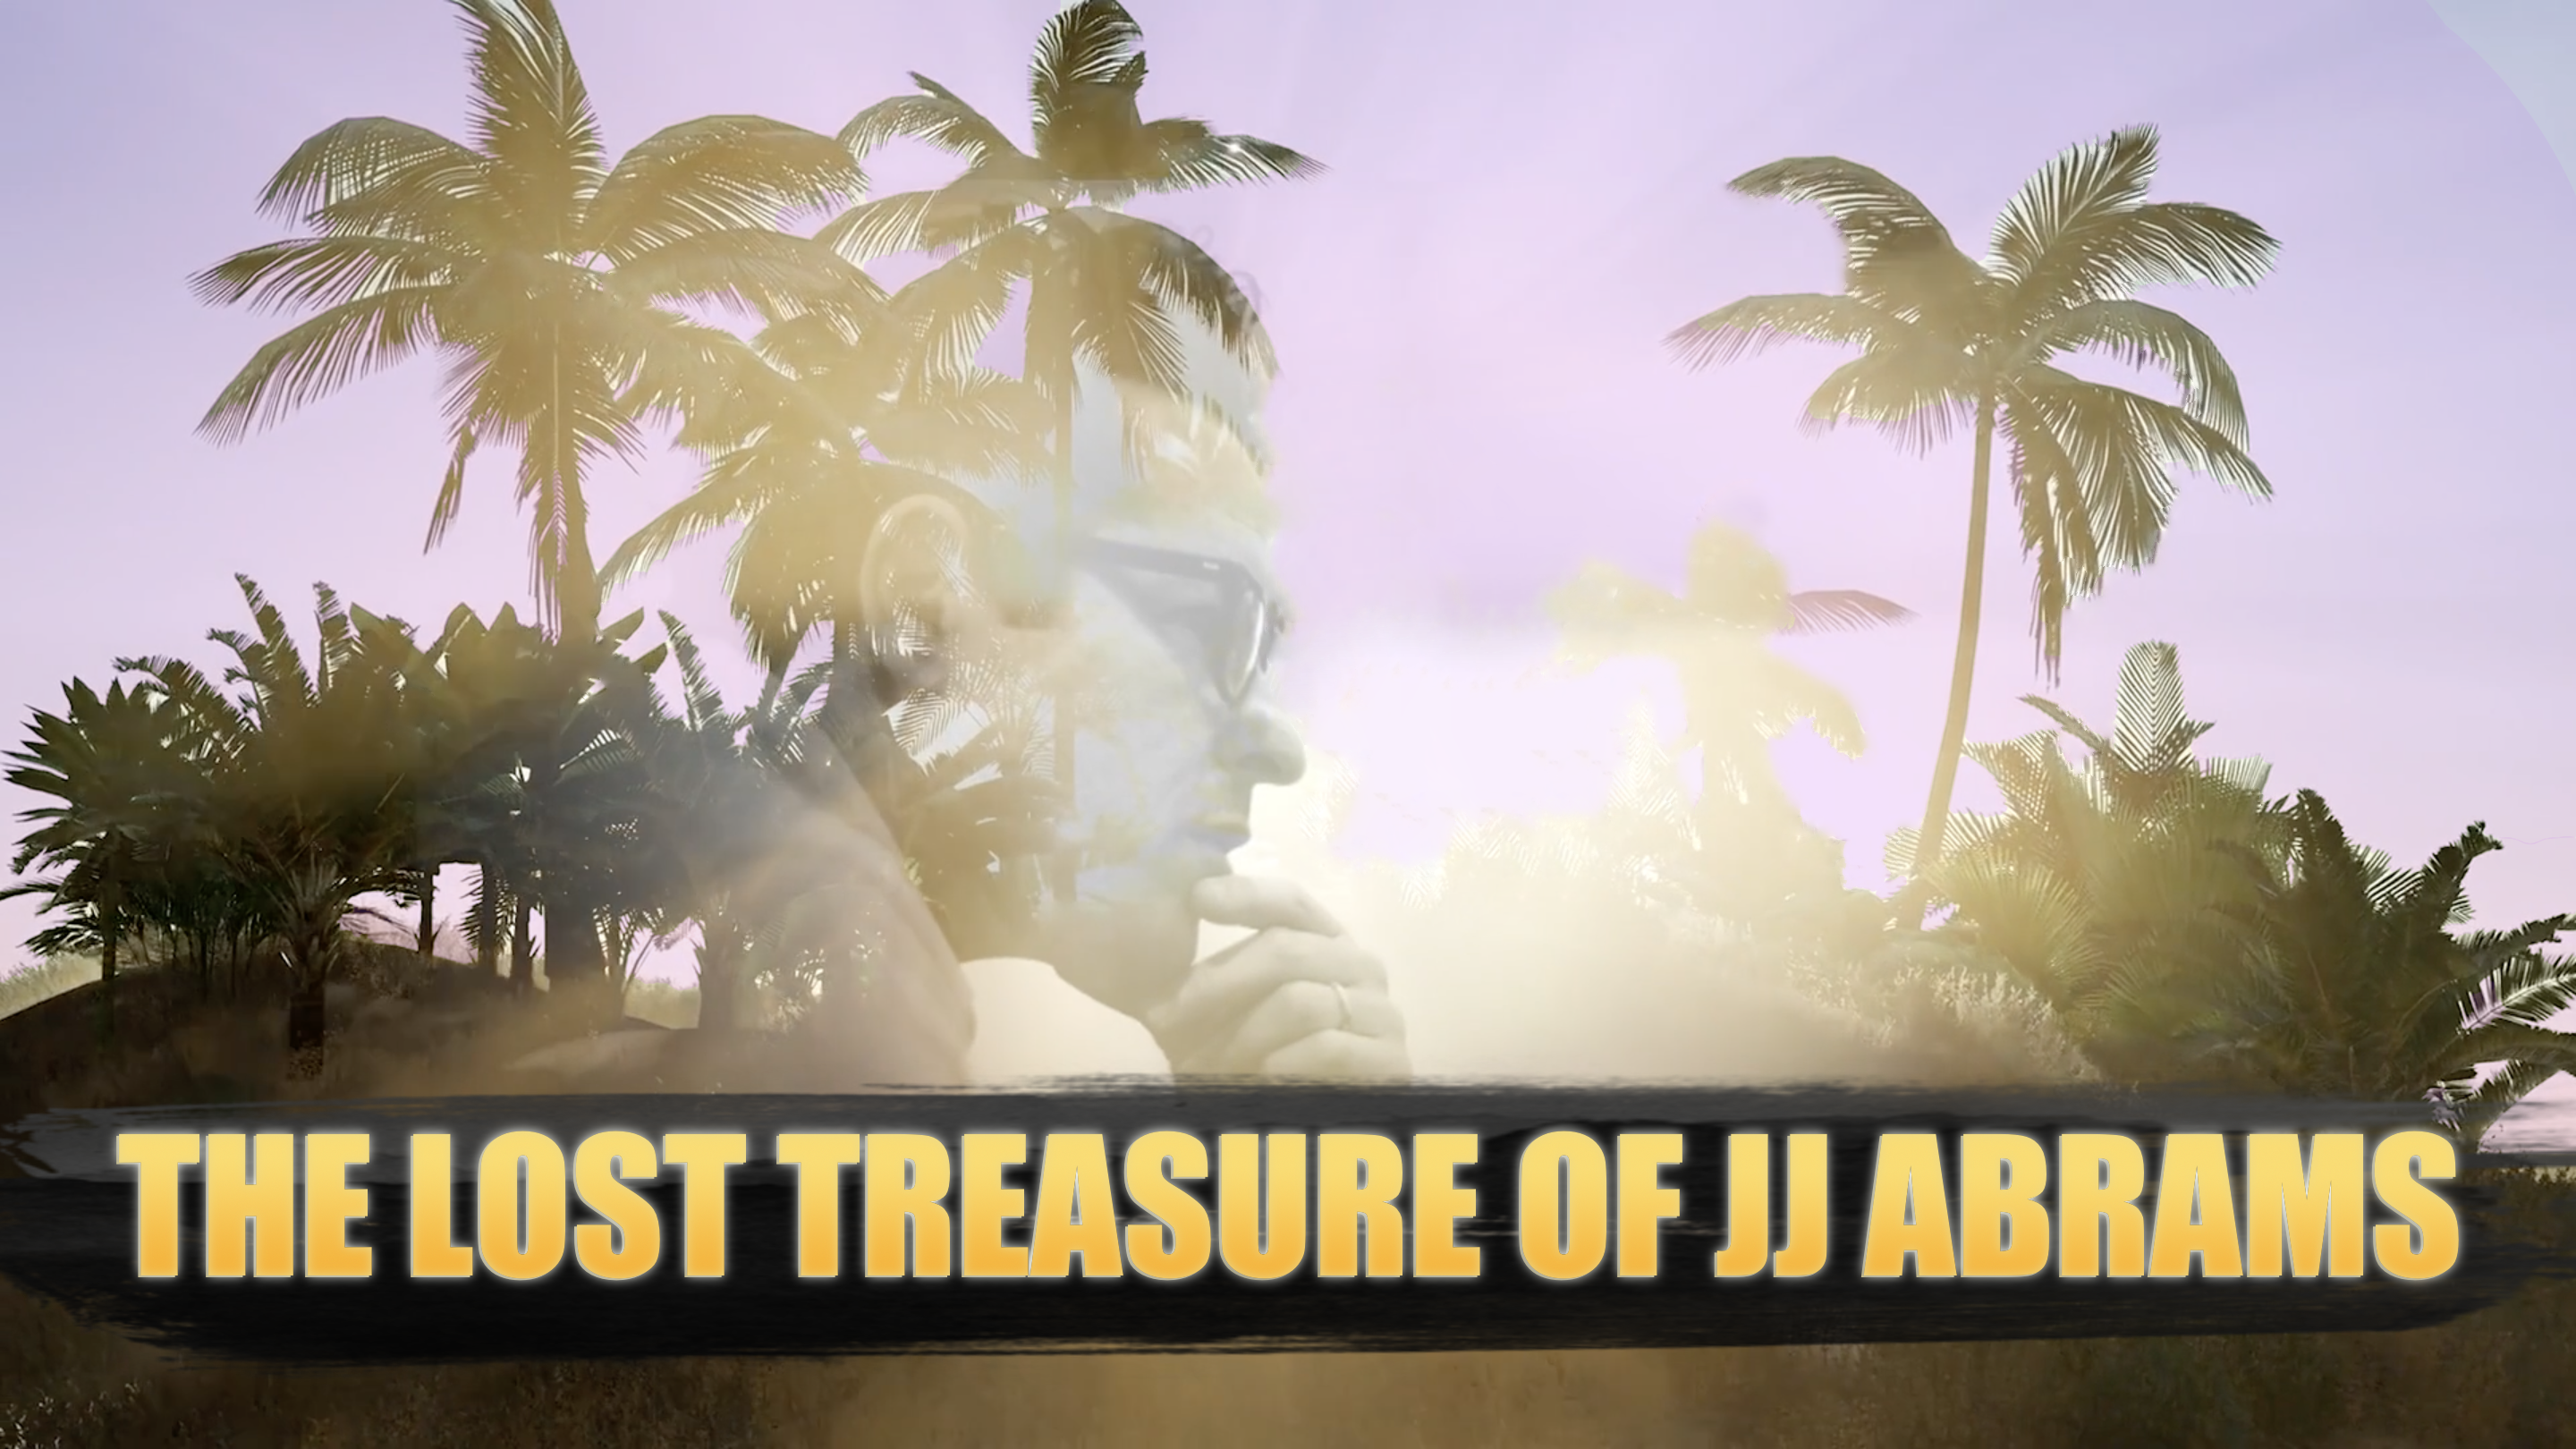 The Lost Treasure of J.J. Abrams